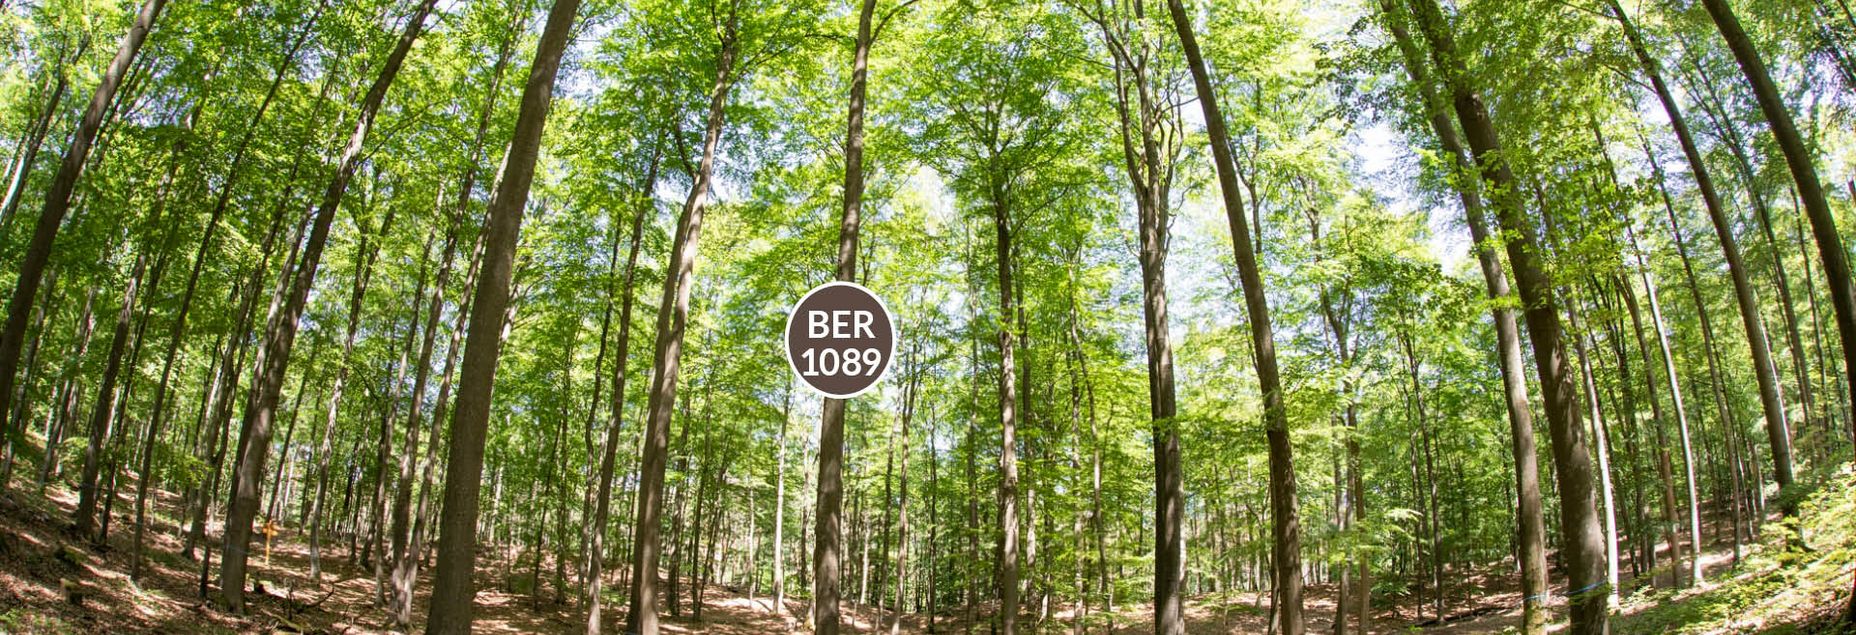 Baum BER 1089 - Fisheyeperspektive